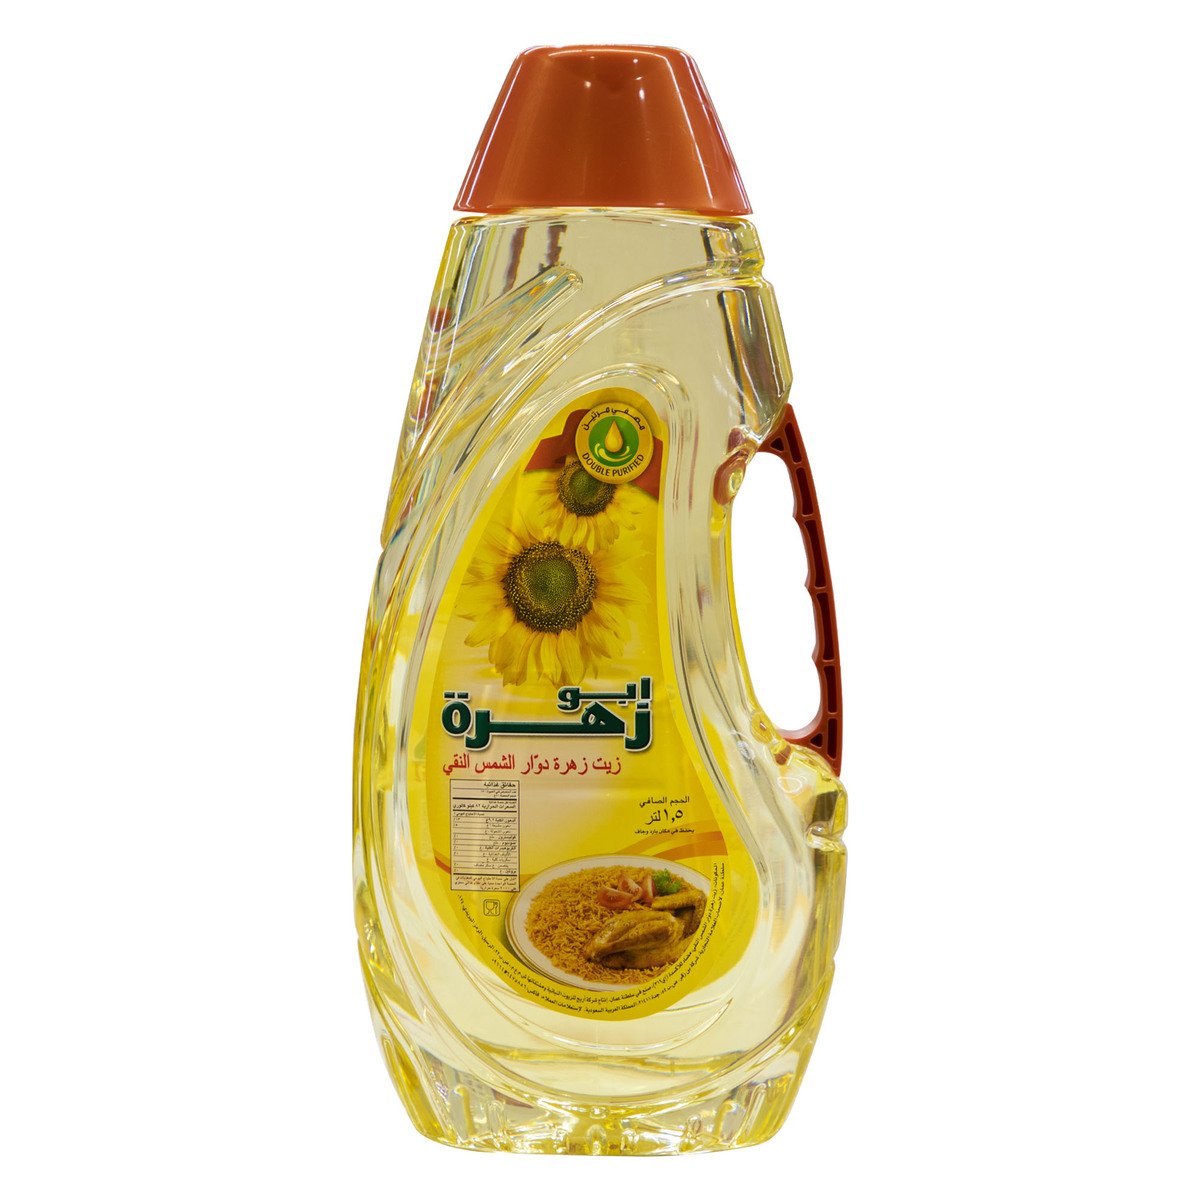 Abu Zahra Sunflower Oil 1.5Litre